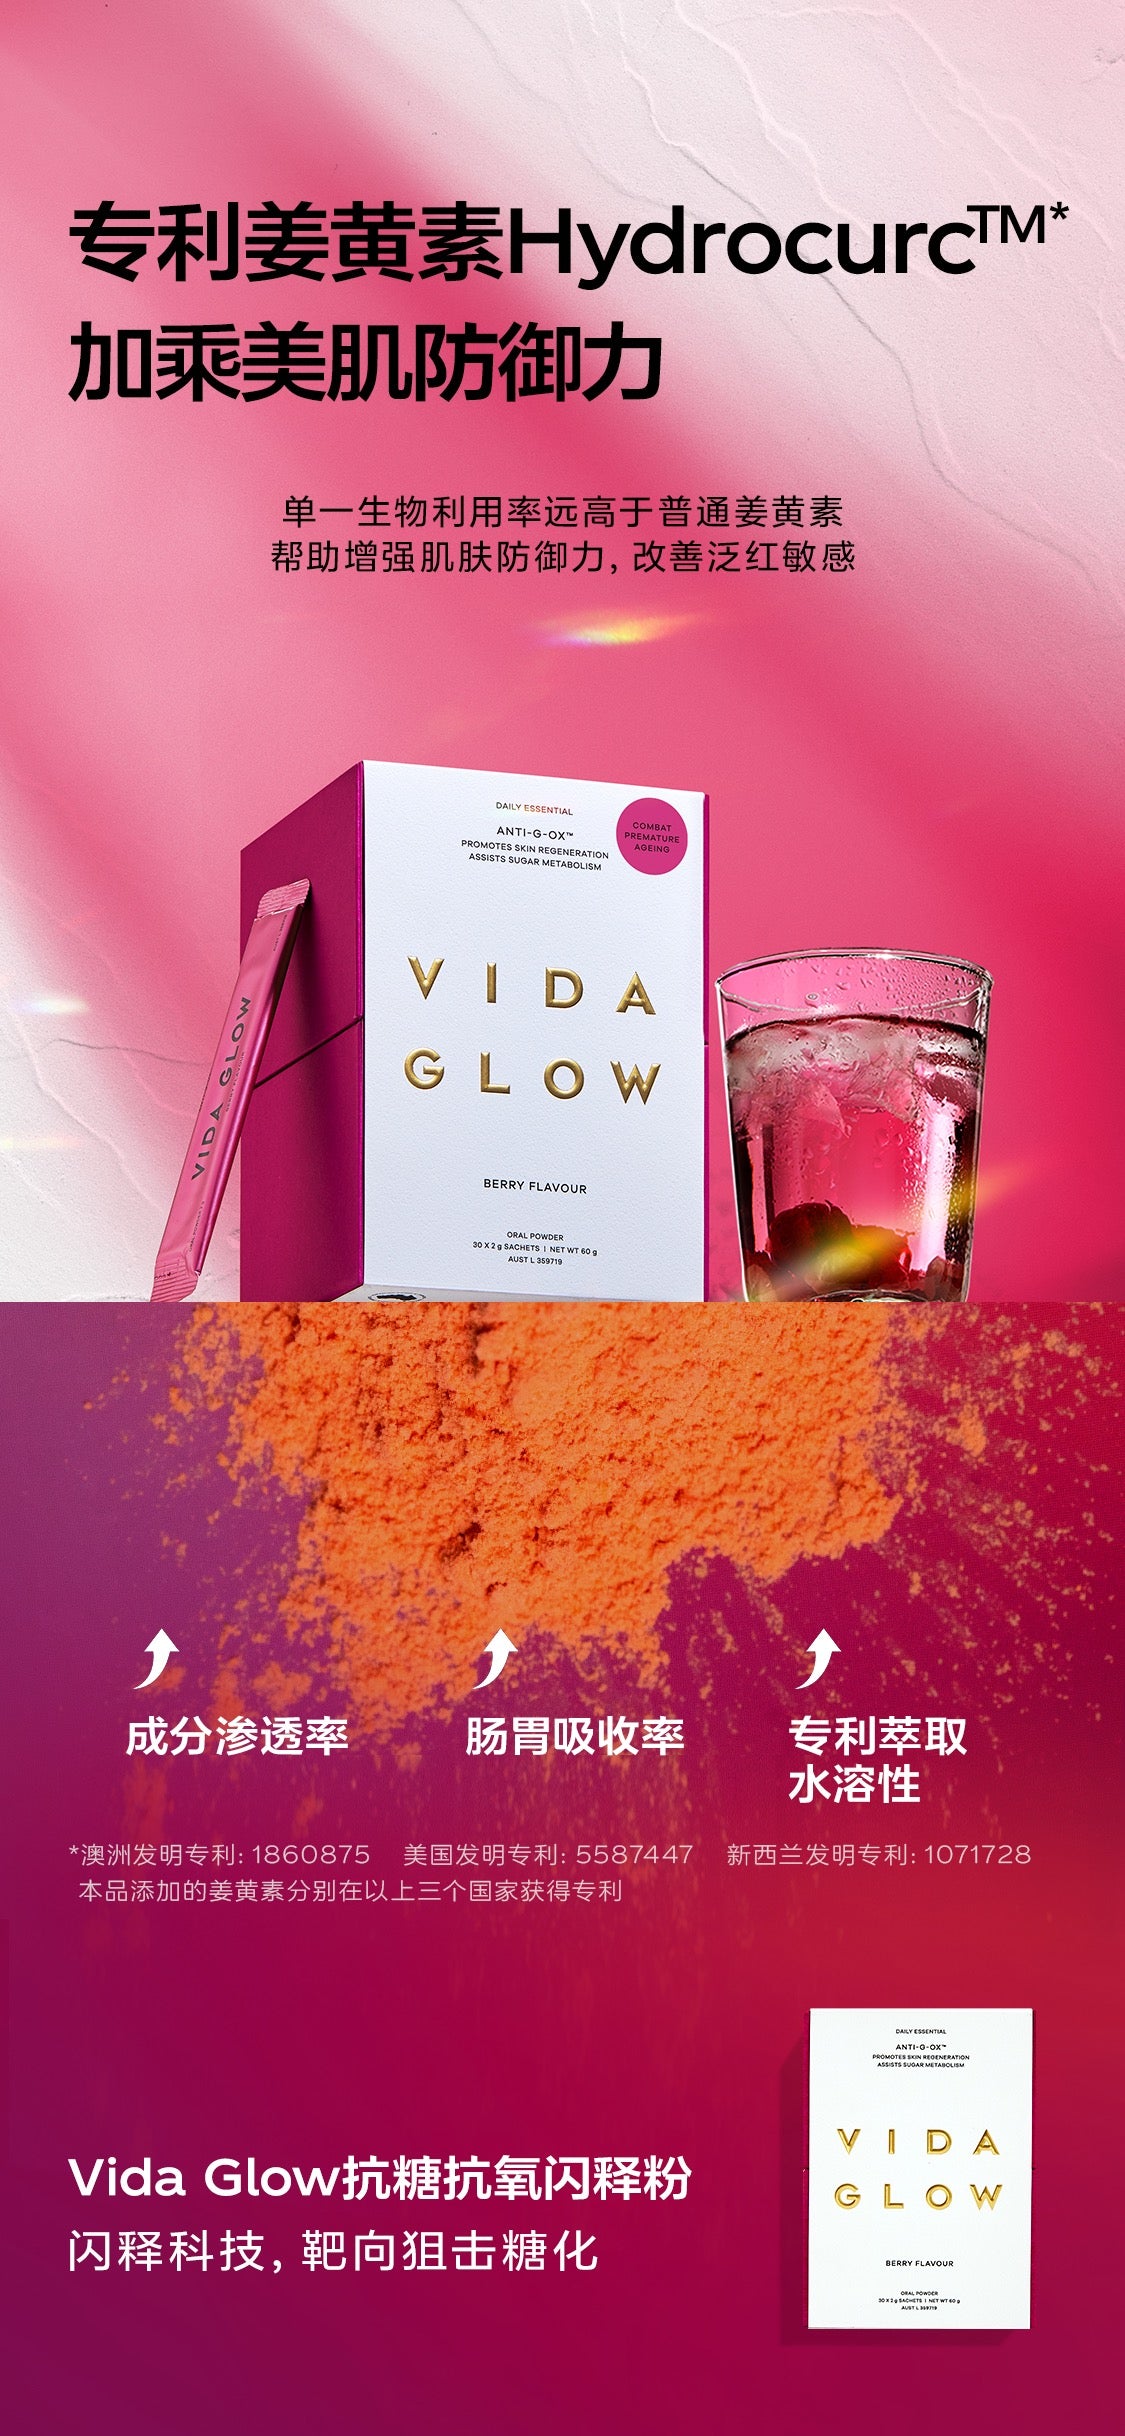 Vida Glow Anti-G-Ox 抗糖闪释粉 (Ready Stocks)